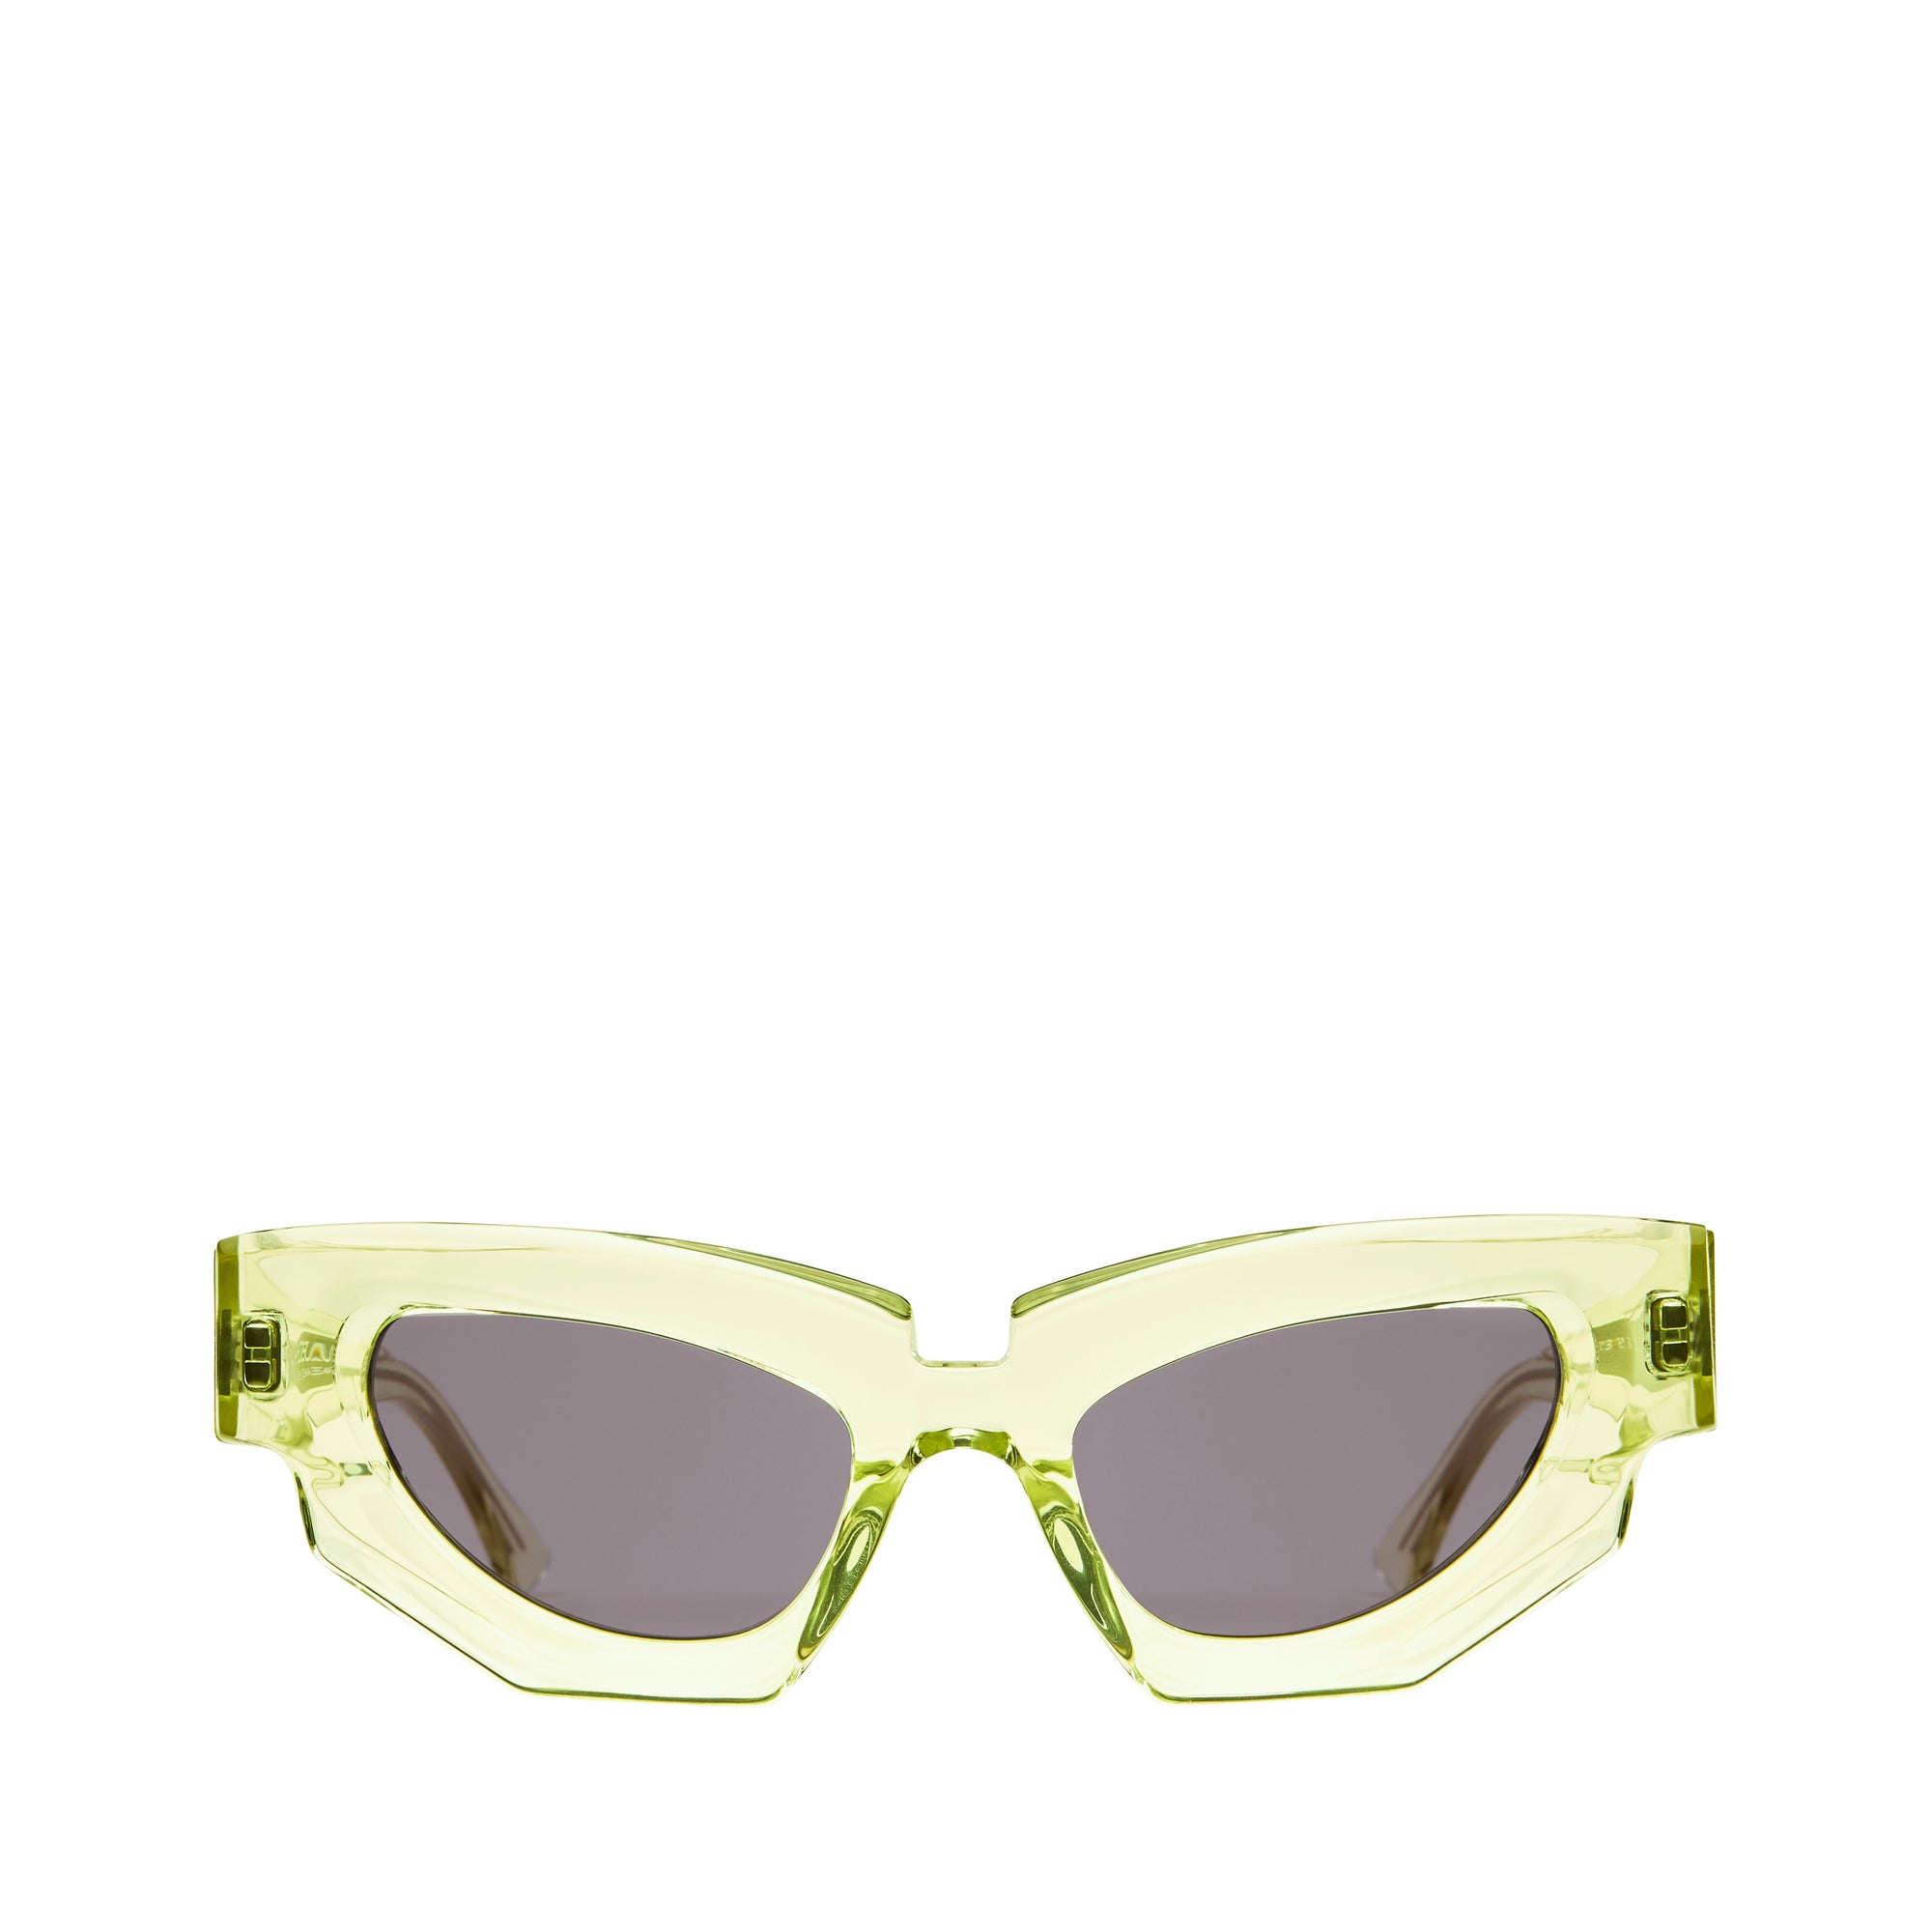 Kuboraum - F5 Sunglasses - (Lime) view 1